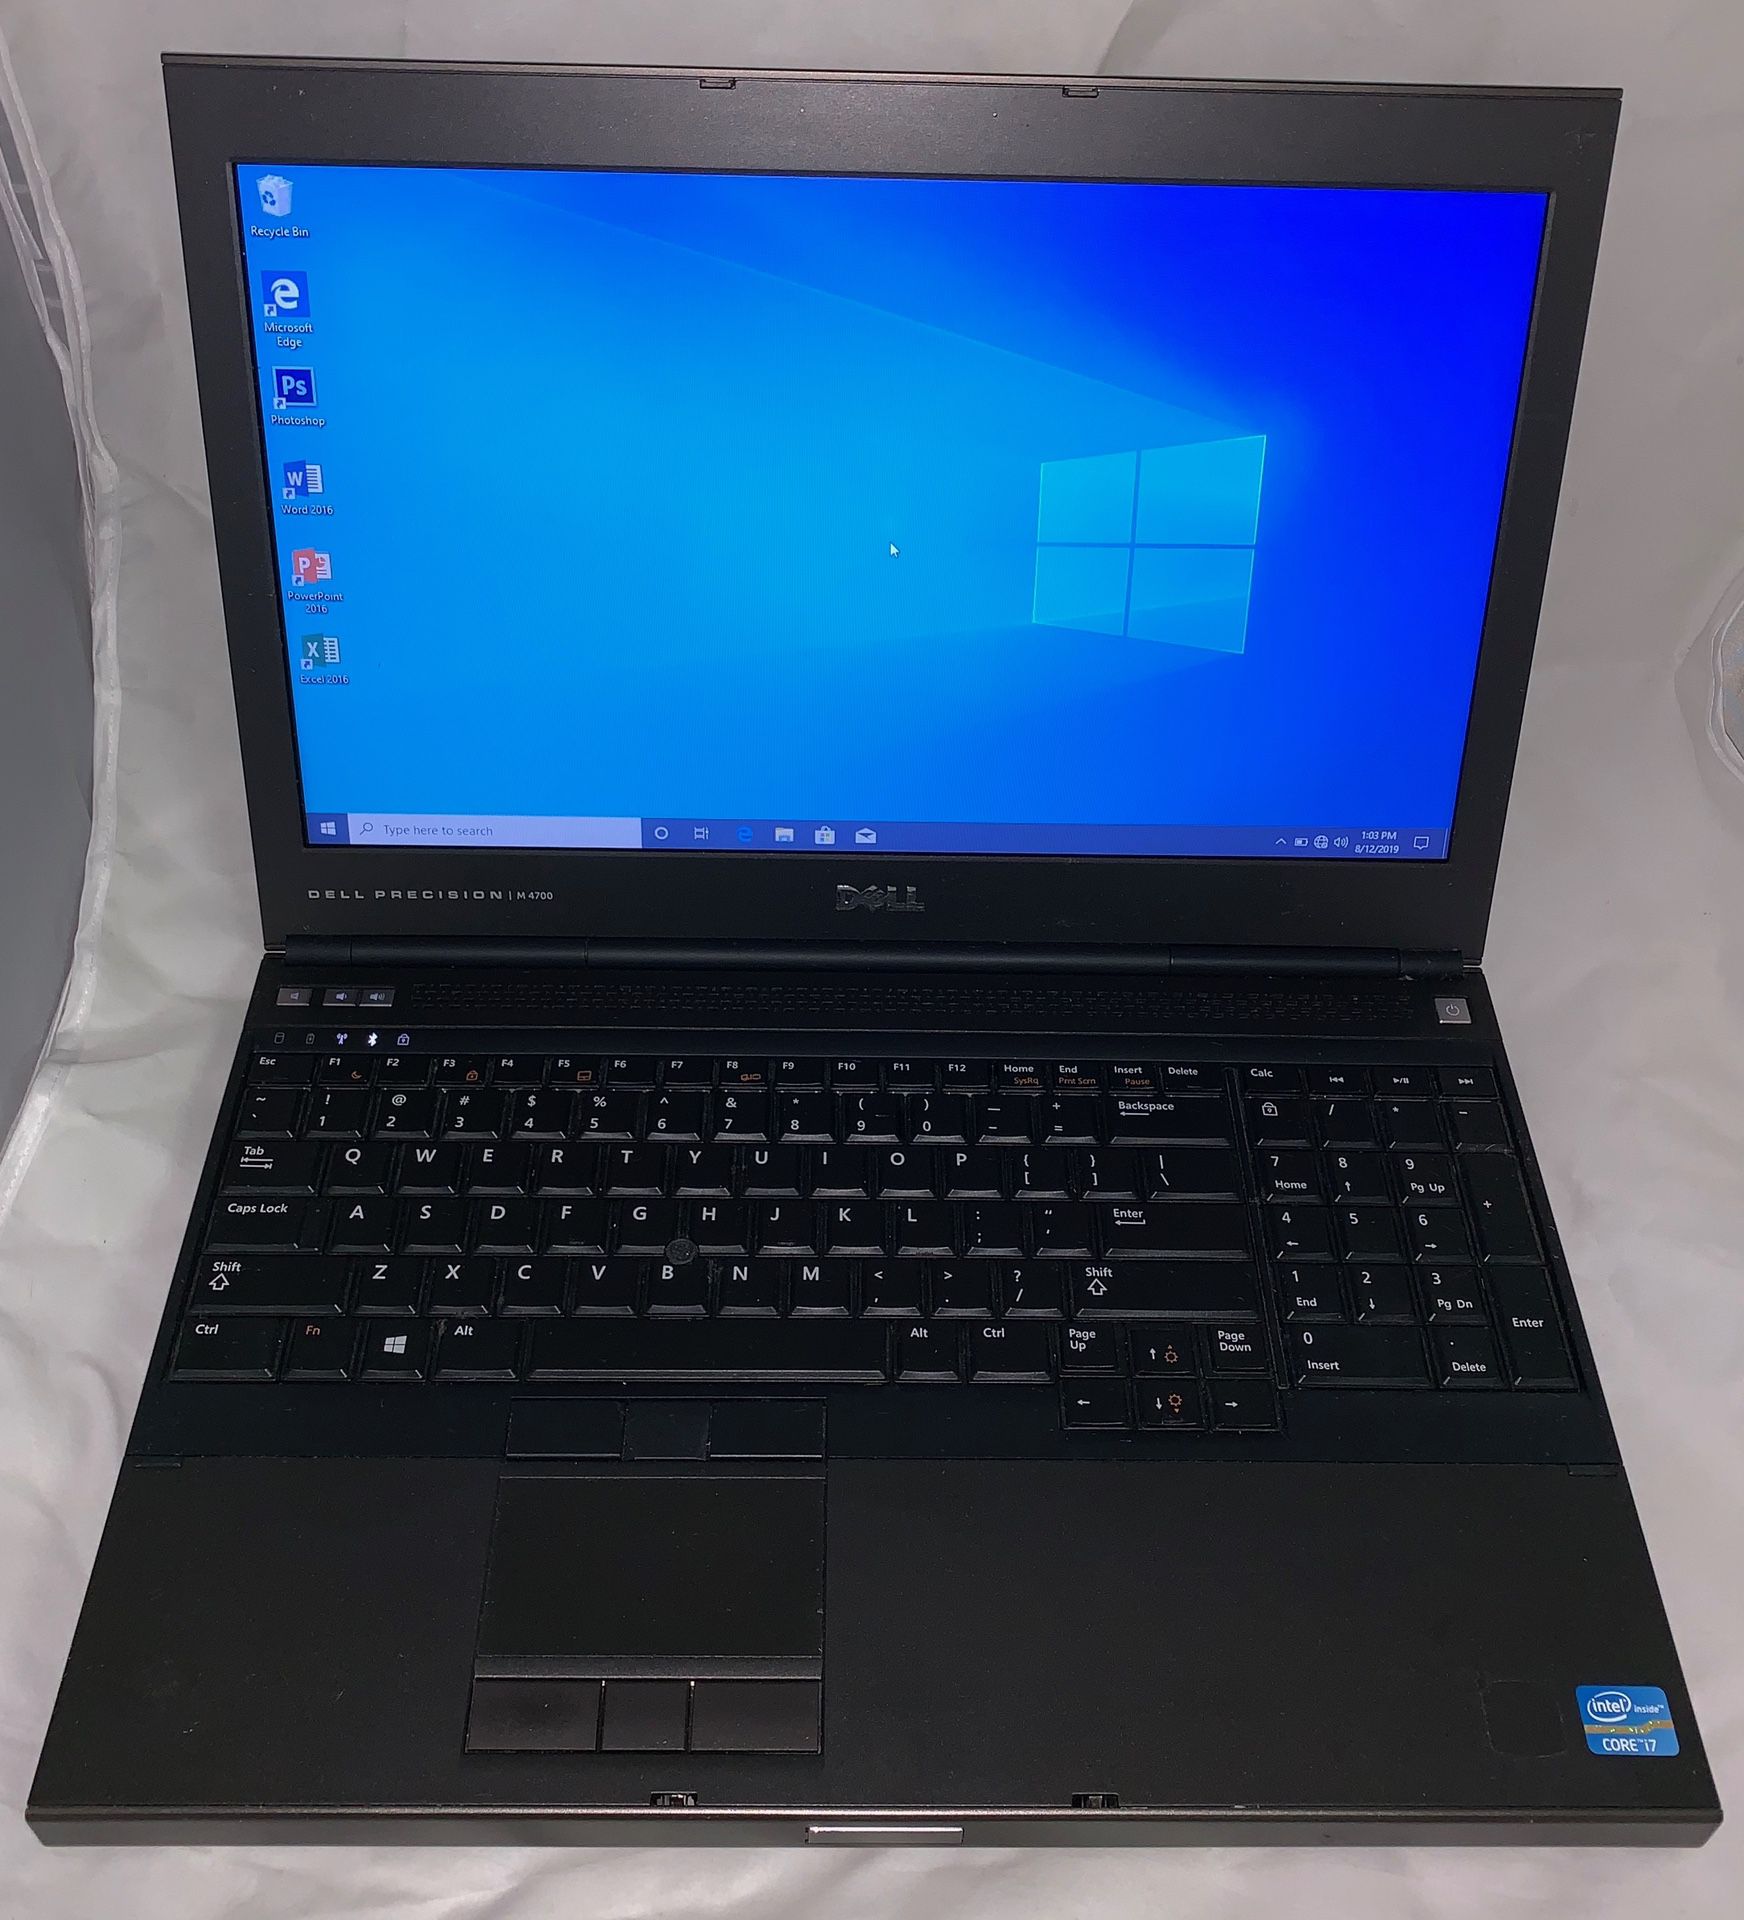 Dell Precision M4700 Laptop 15.6” (500GB, Intel i7, 2.7GHz, 8GB RAM) Workstation Computer